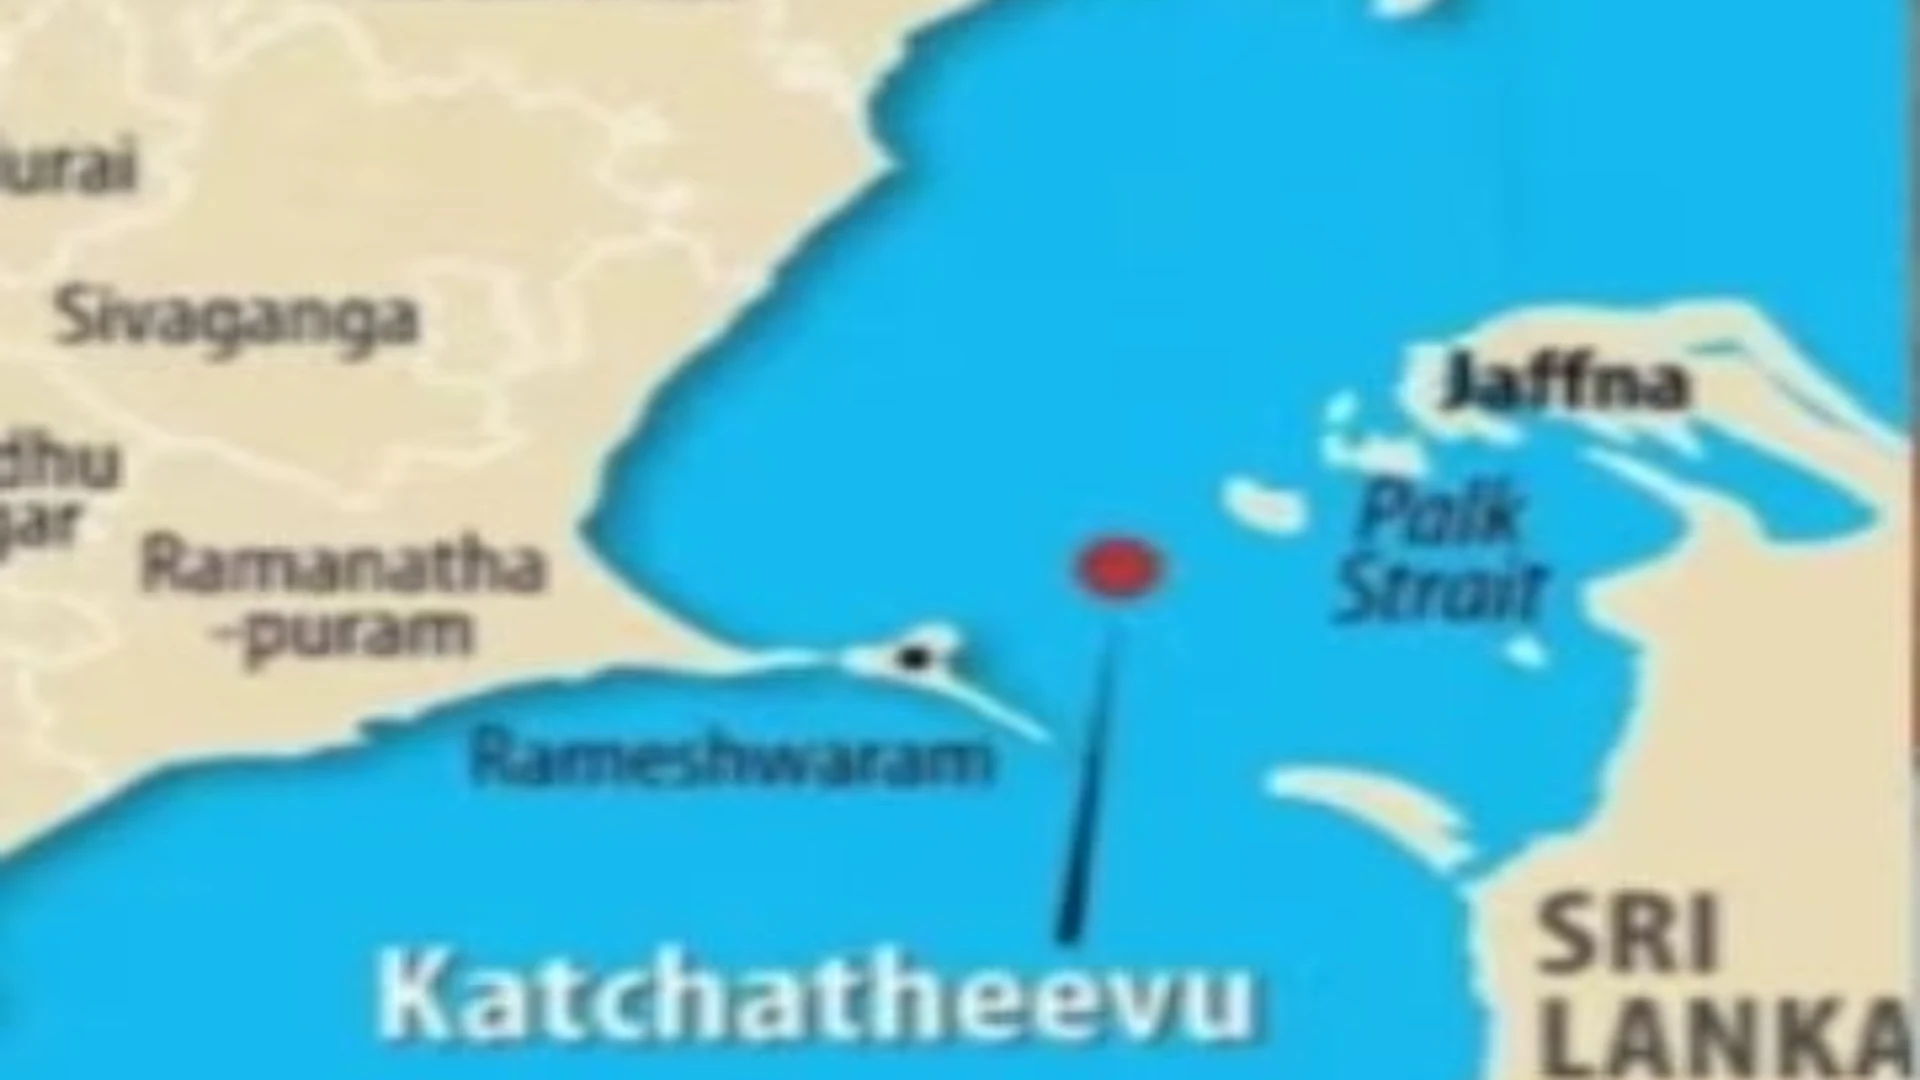 Katchatheevu